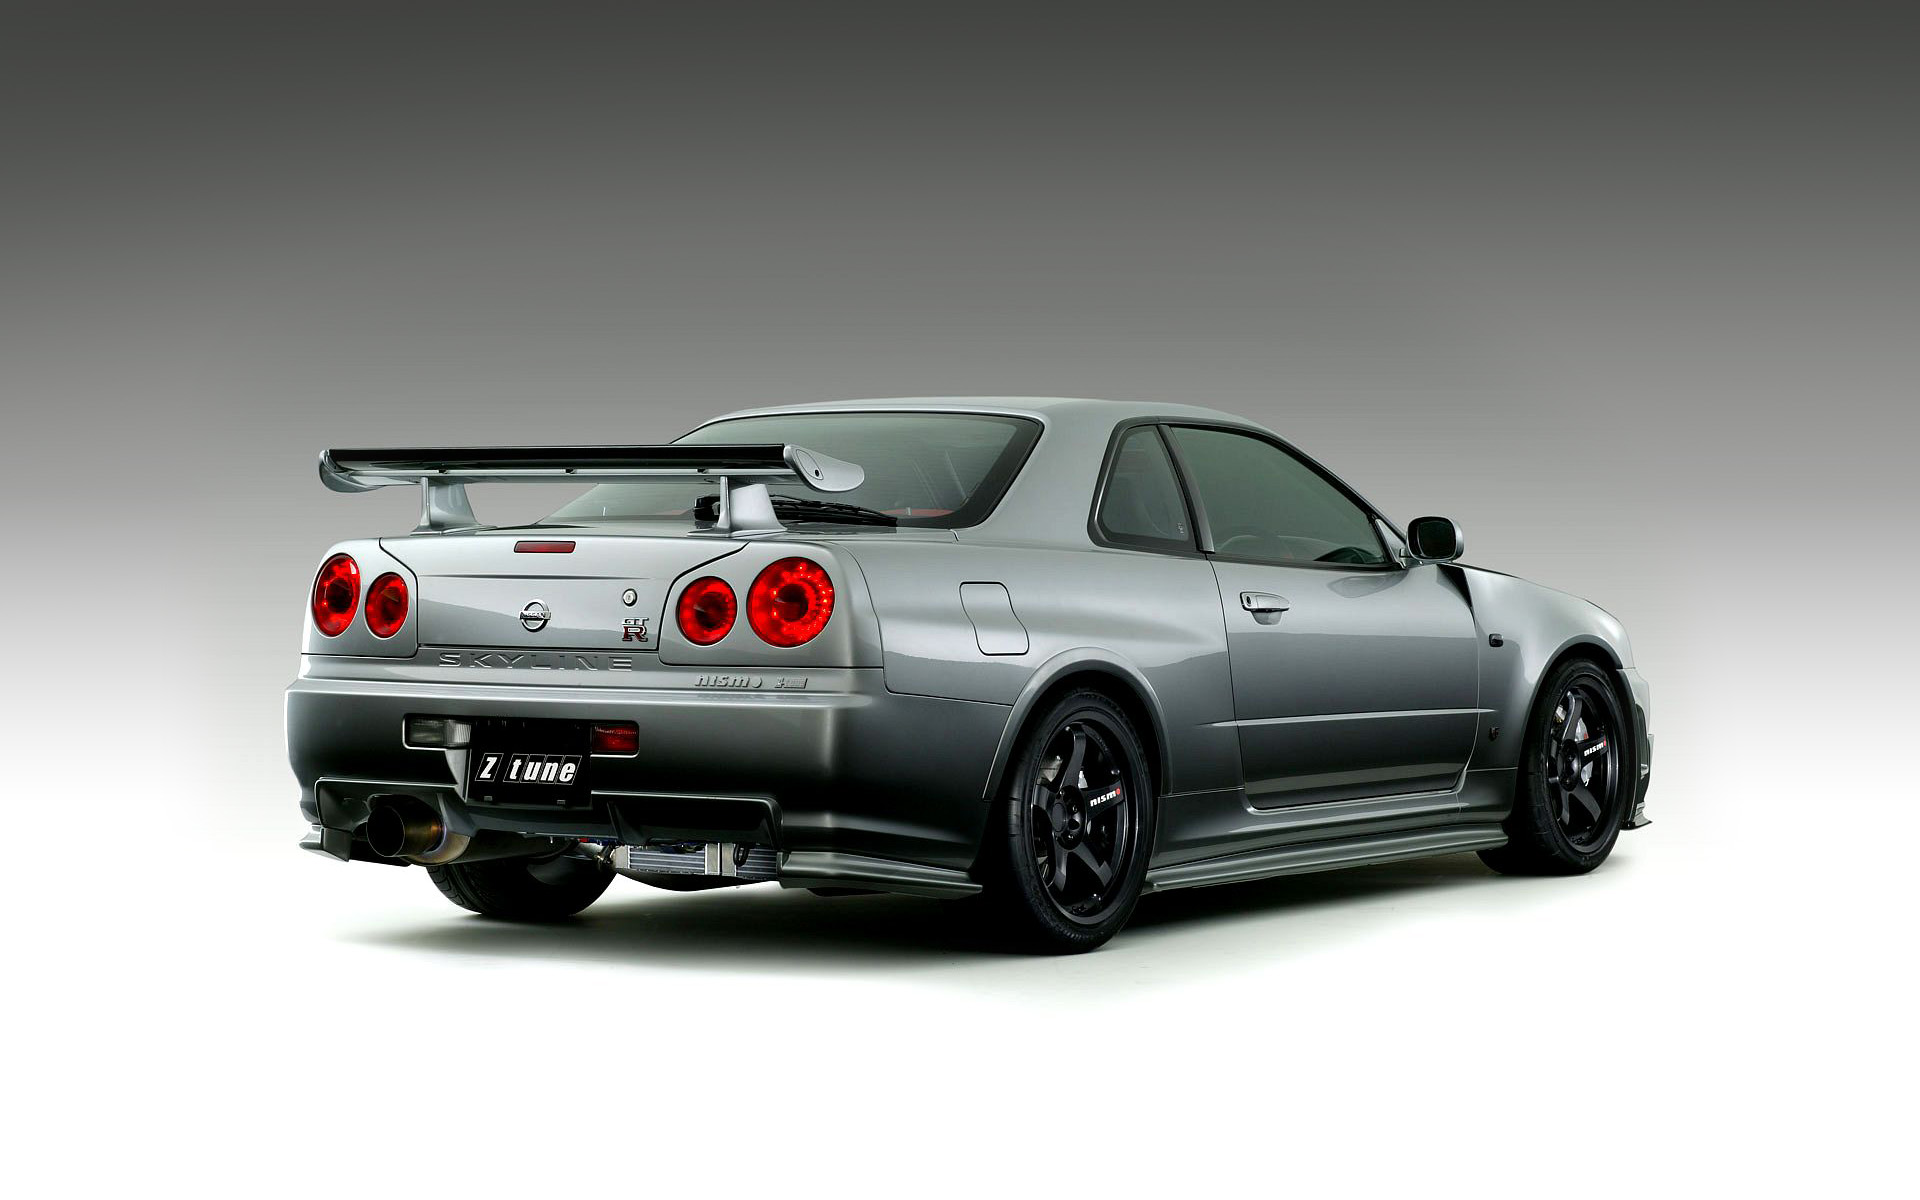  2001 Nissan Skyline R34 GT-R Nismo Wallpaper.